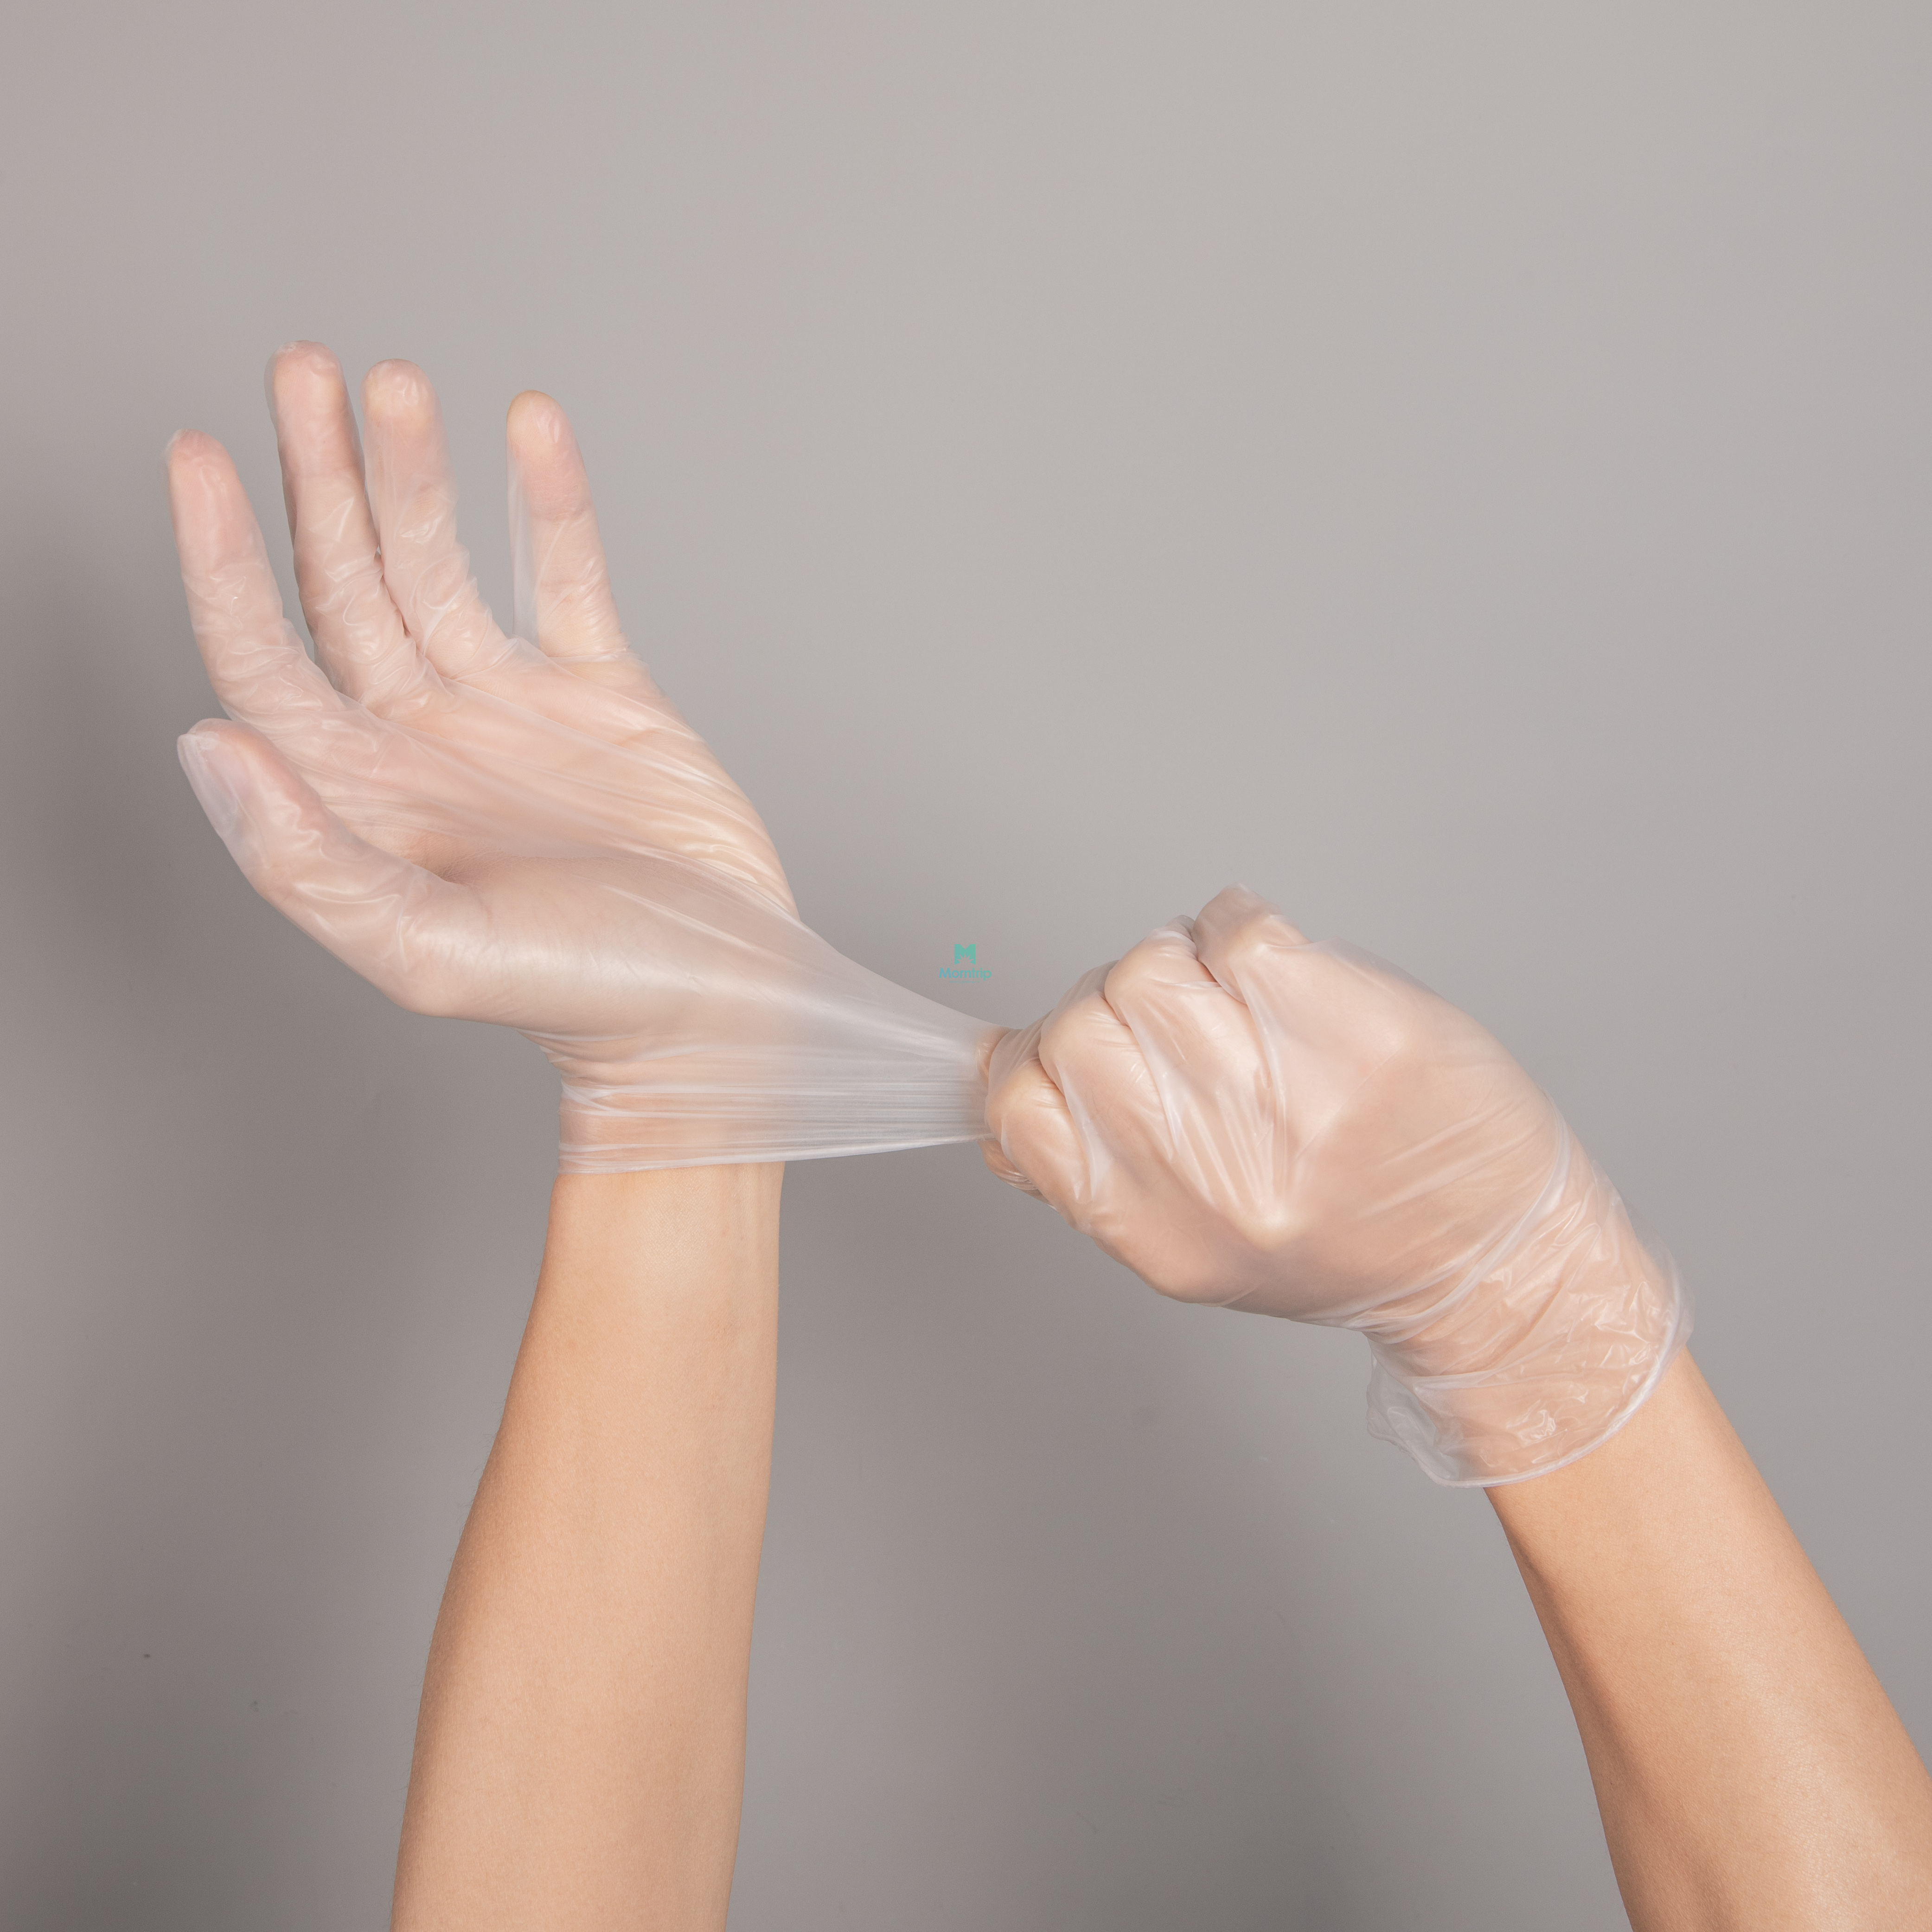 Wholesale Powder Free 100 Pcs Manufacturer Clean Examination Disposable Gloves